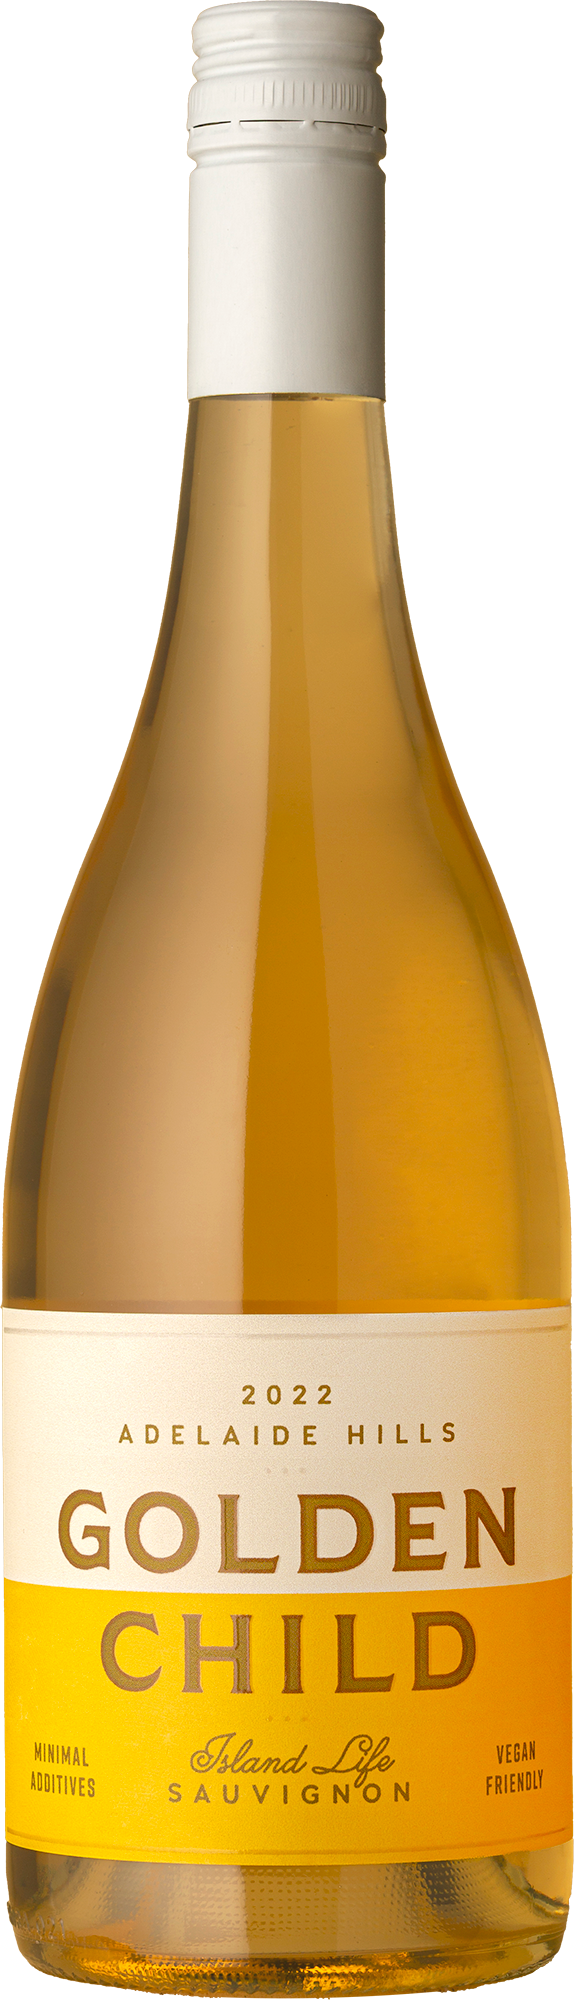 Golden Child - Island Life Sauvignon 2022 White Wine